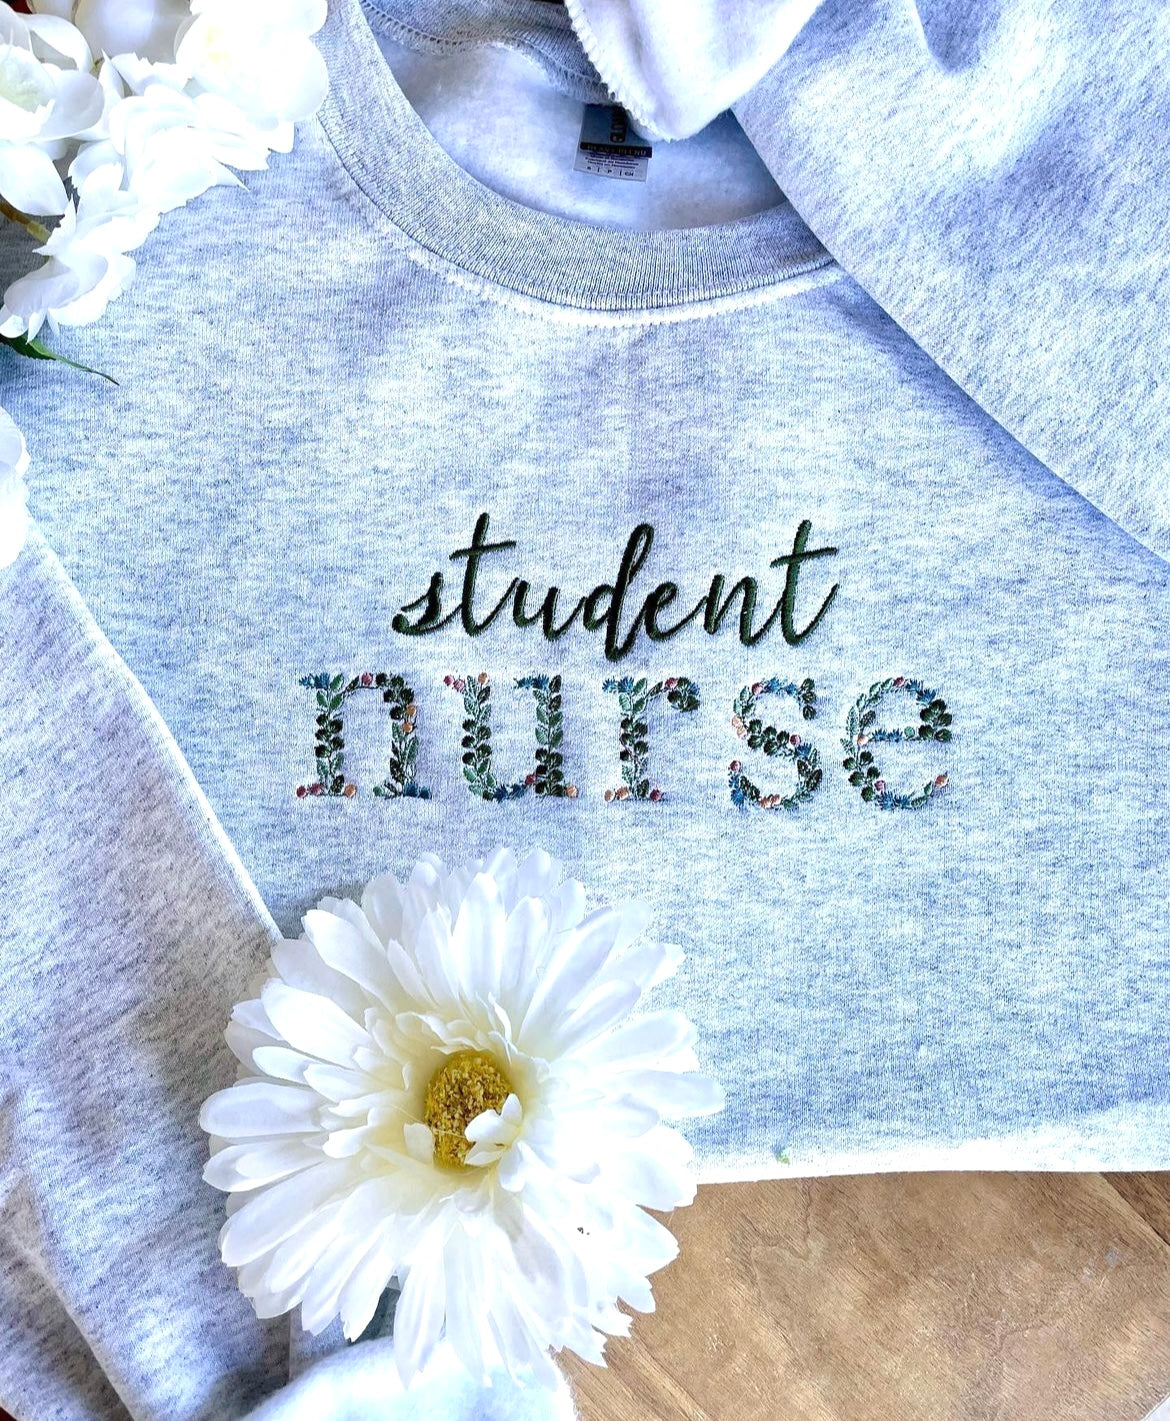 Registered Nurse Sweater